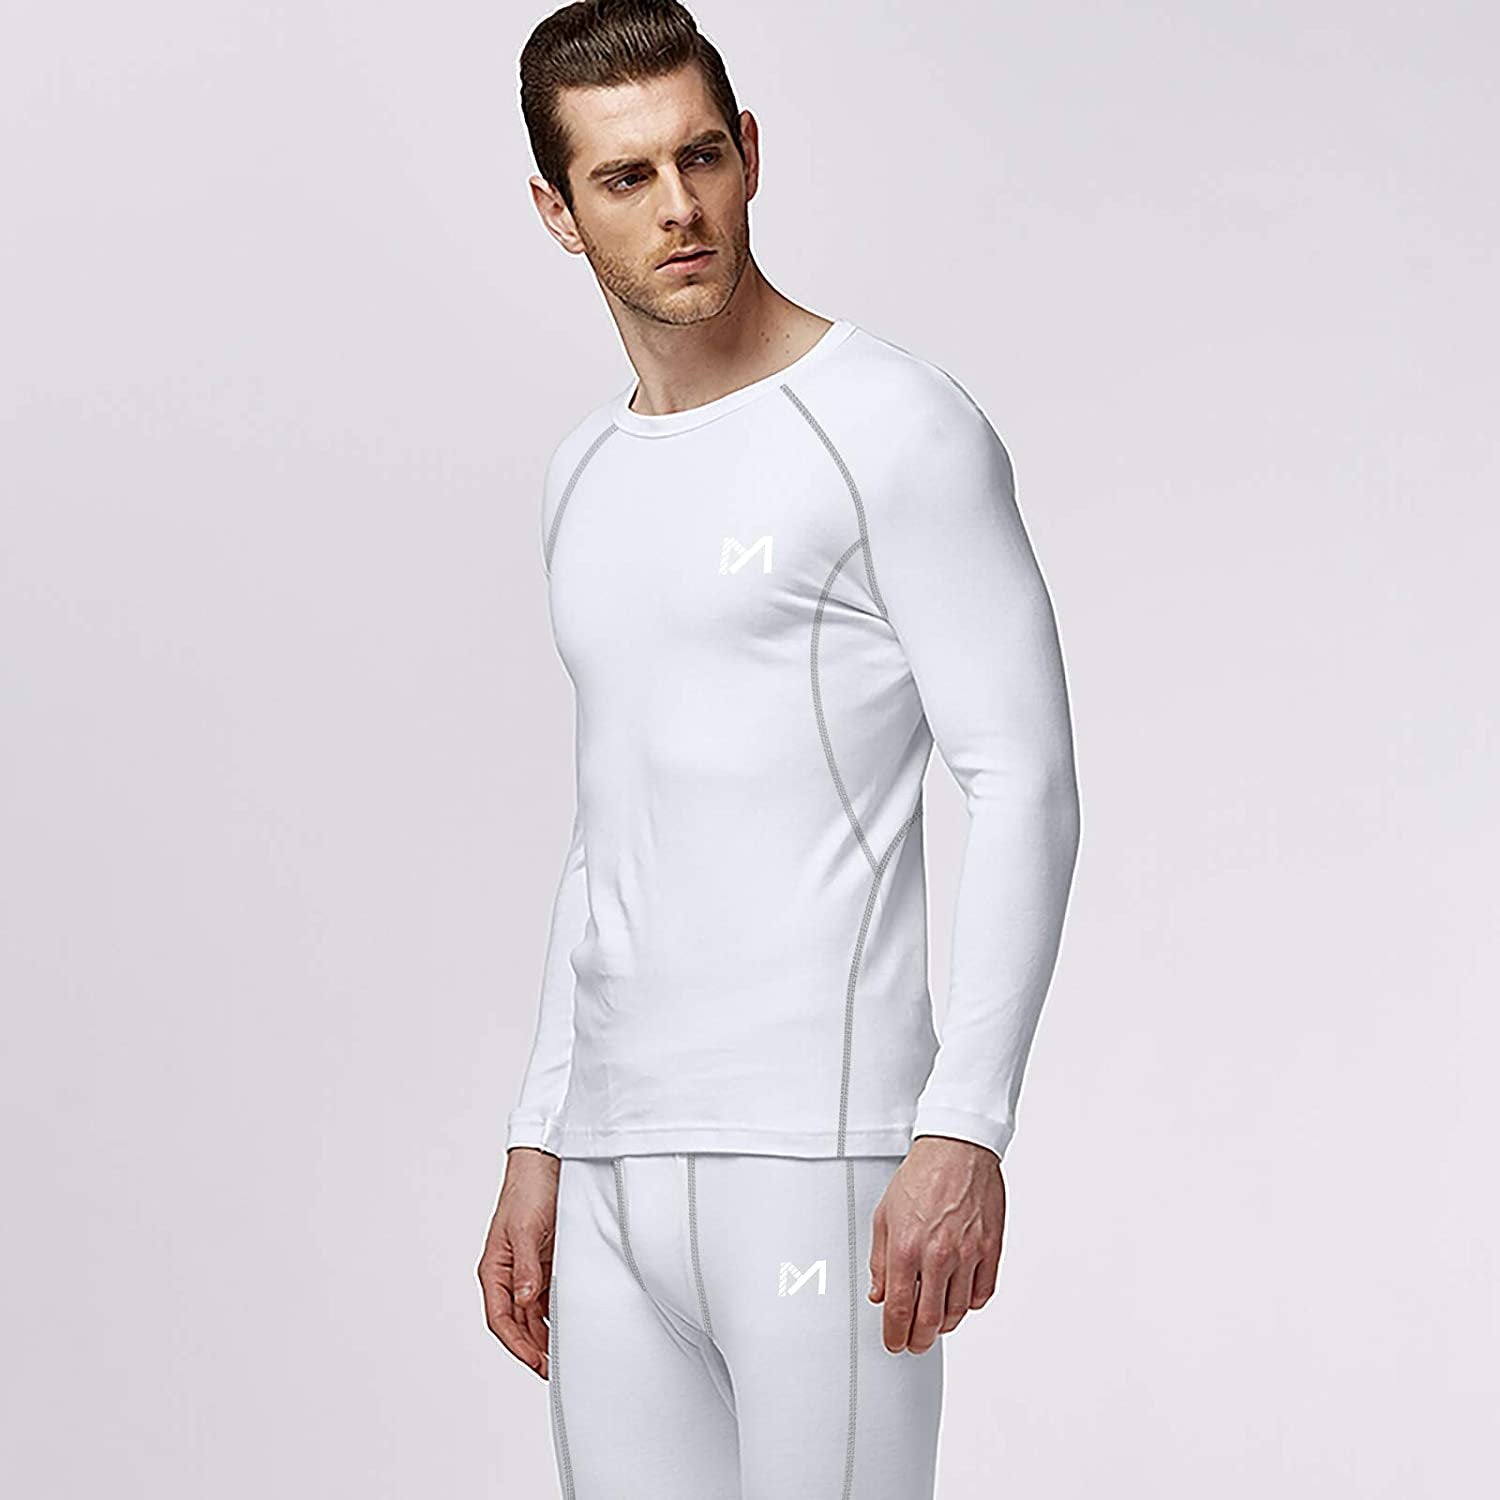 Men's Thermal Underwear Set Sport Long Johns Base Layer – MEETWEE